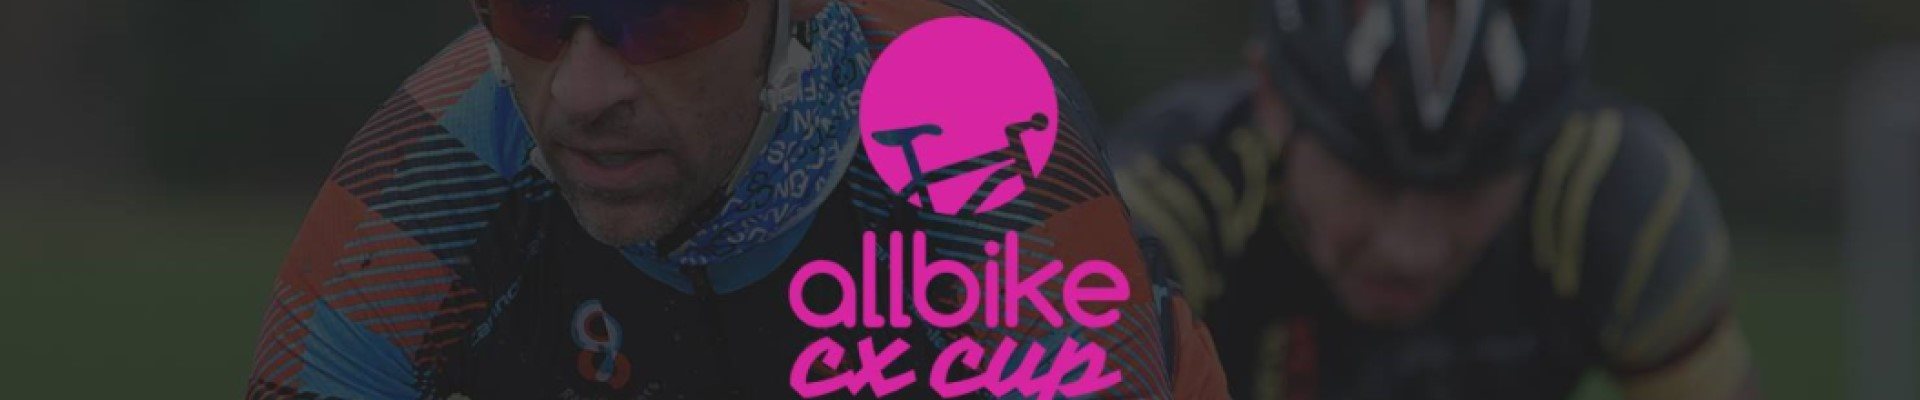 Allbike CX cup 19/20 #samlet